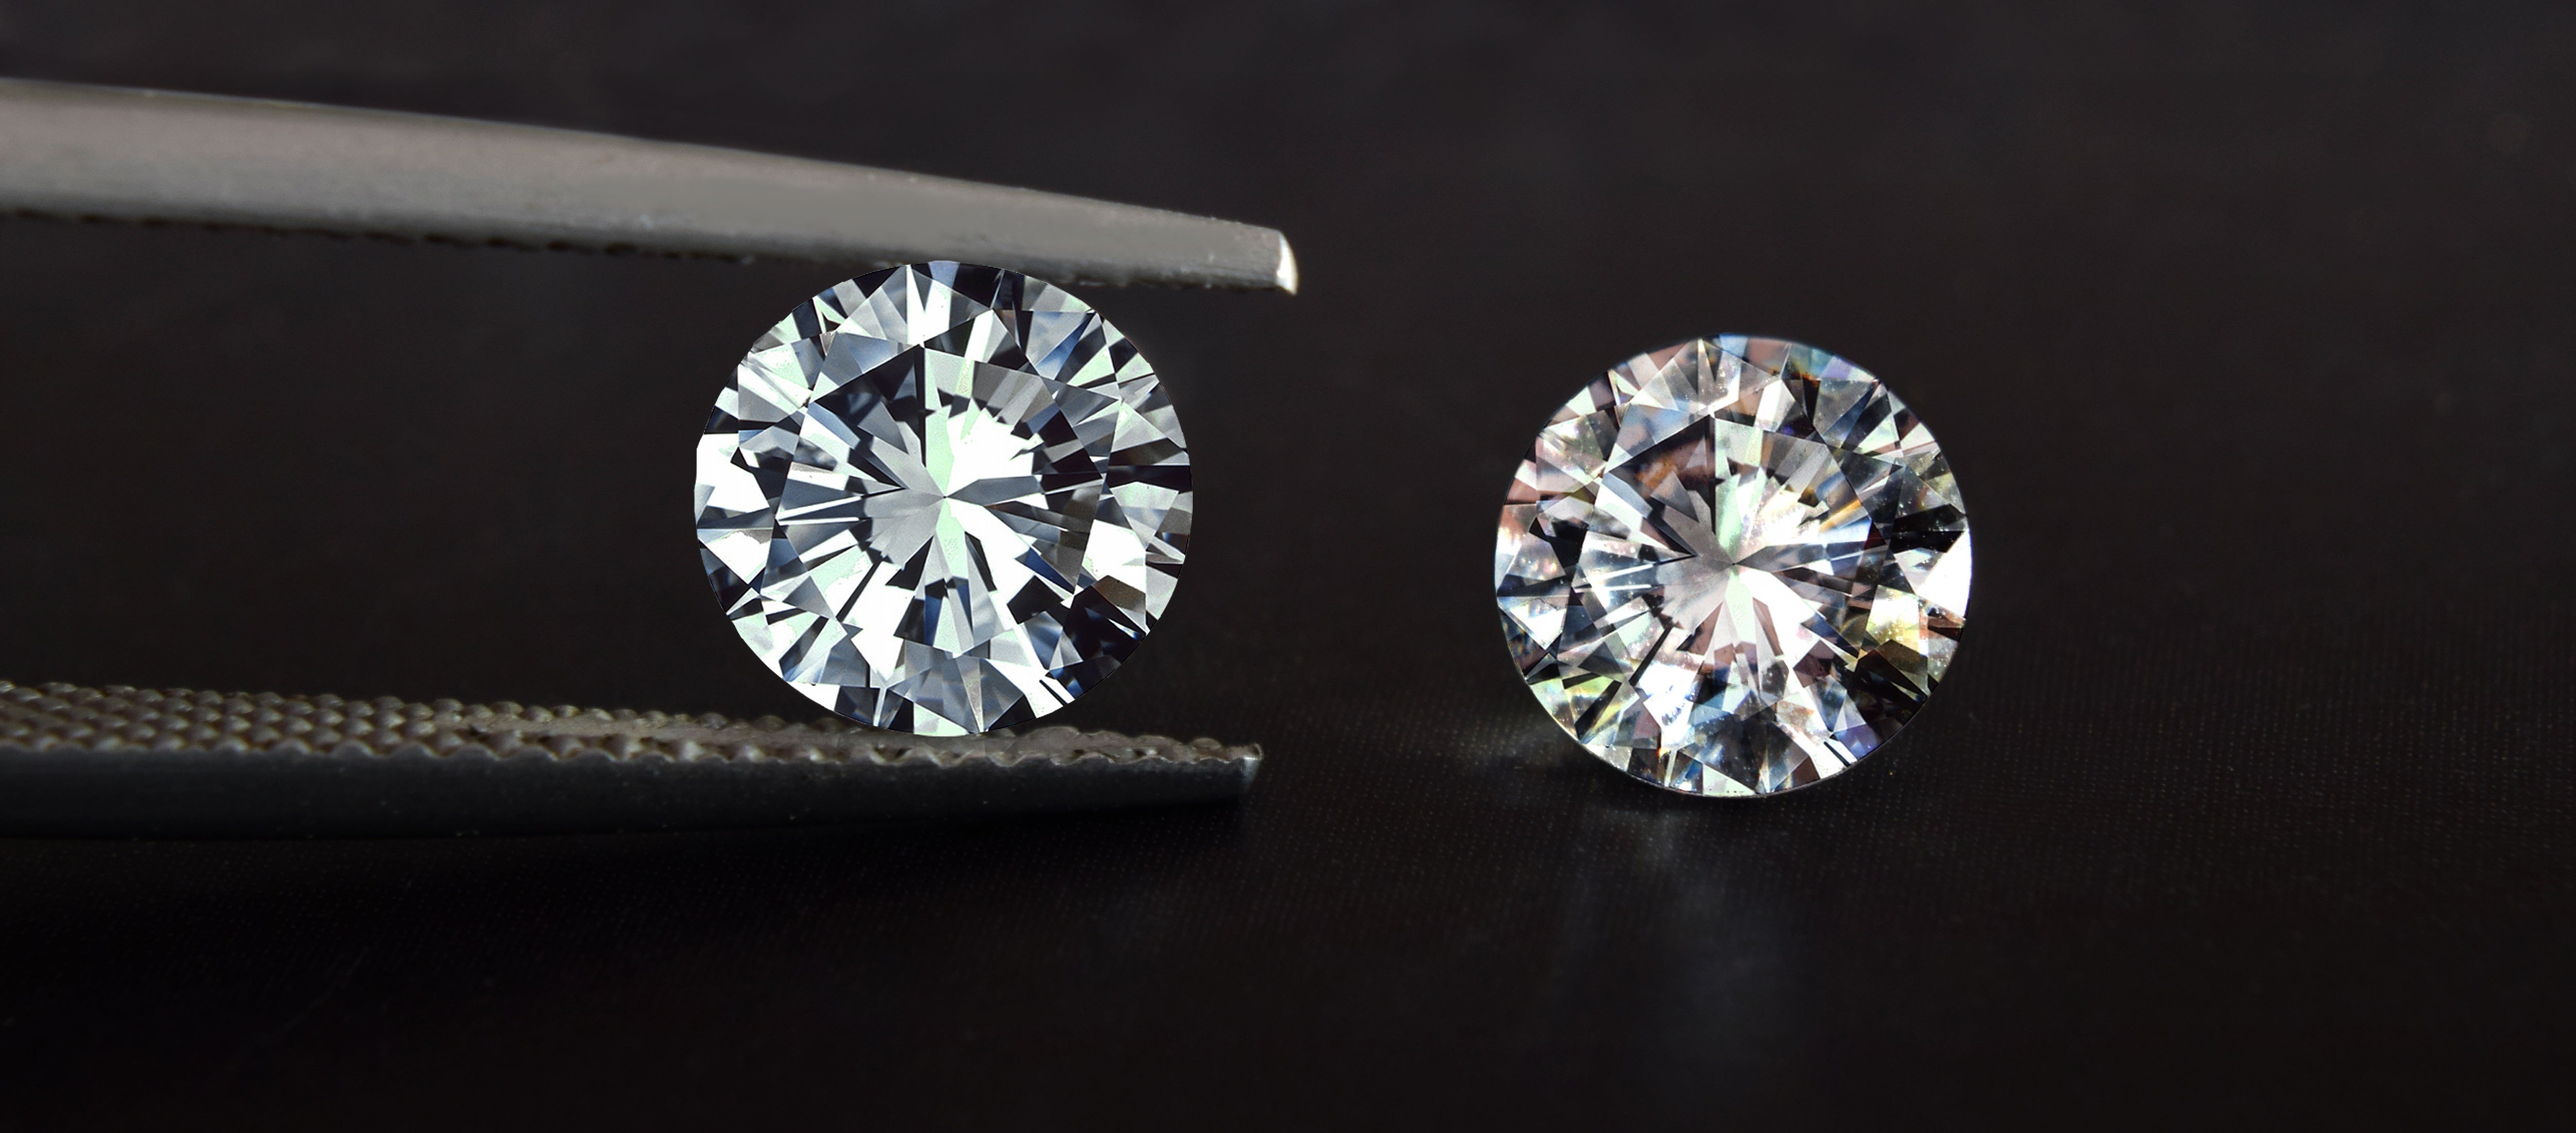 Moissanite Diamonds | The Brilliant Alternative to Traditional Diamond Engagement Rings